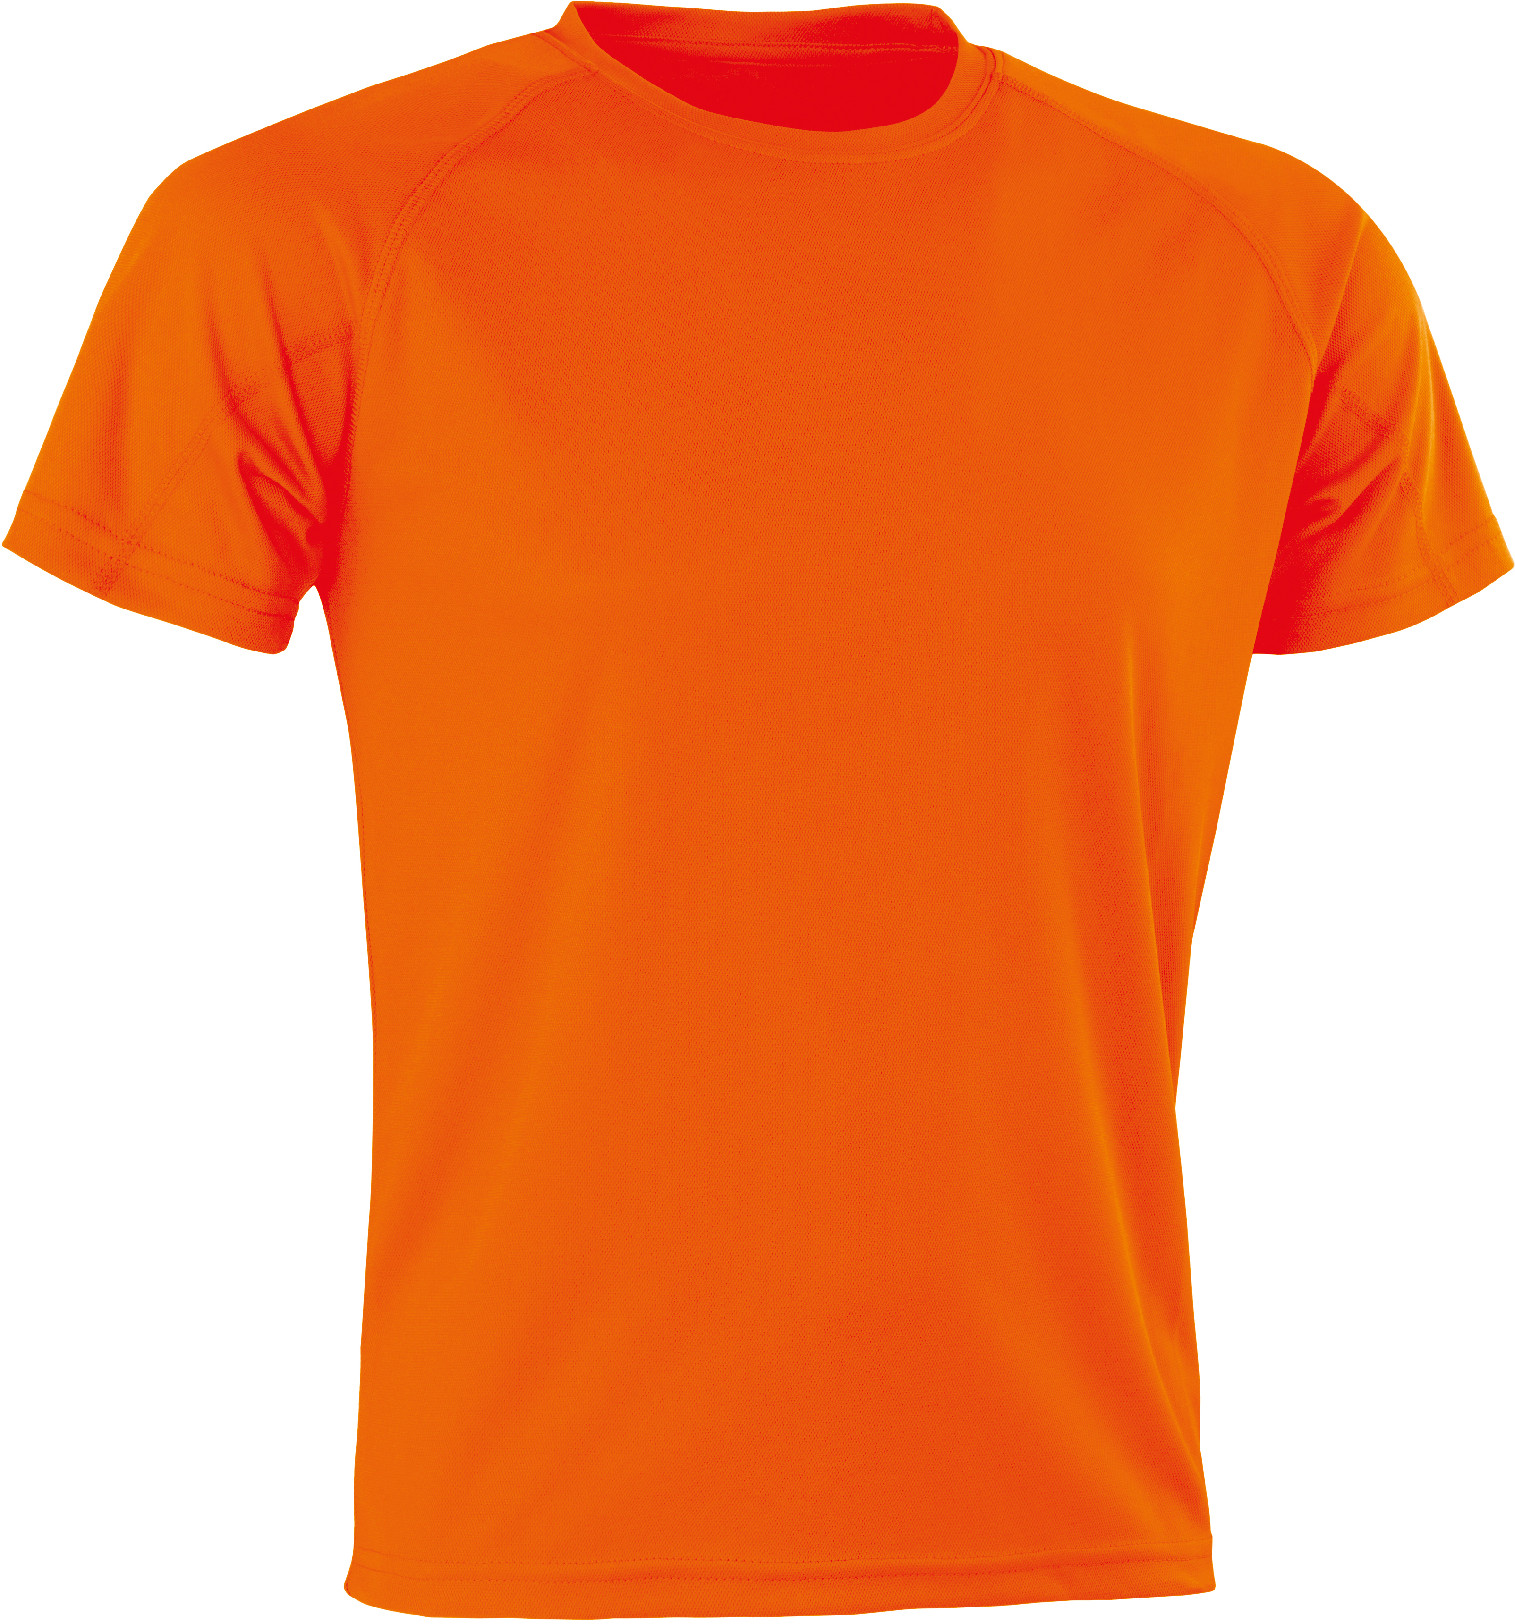 Sportovní tričko Aircool S287X Barva: neon orange, Velikost: XS